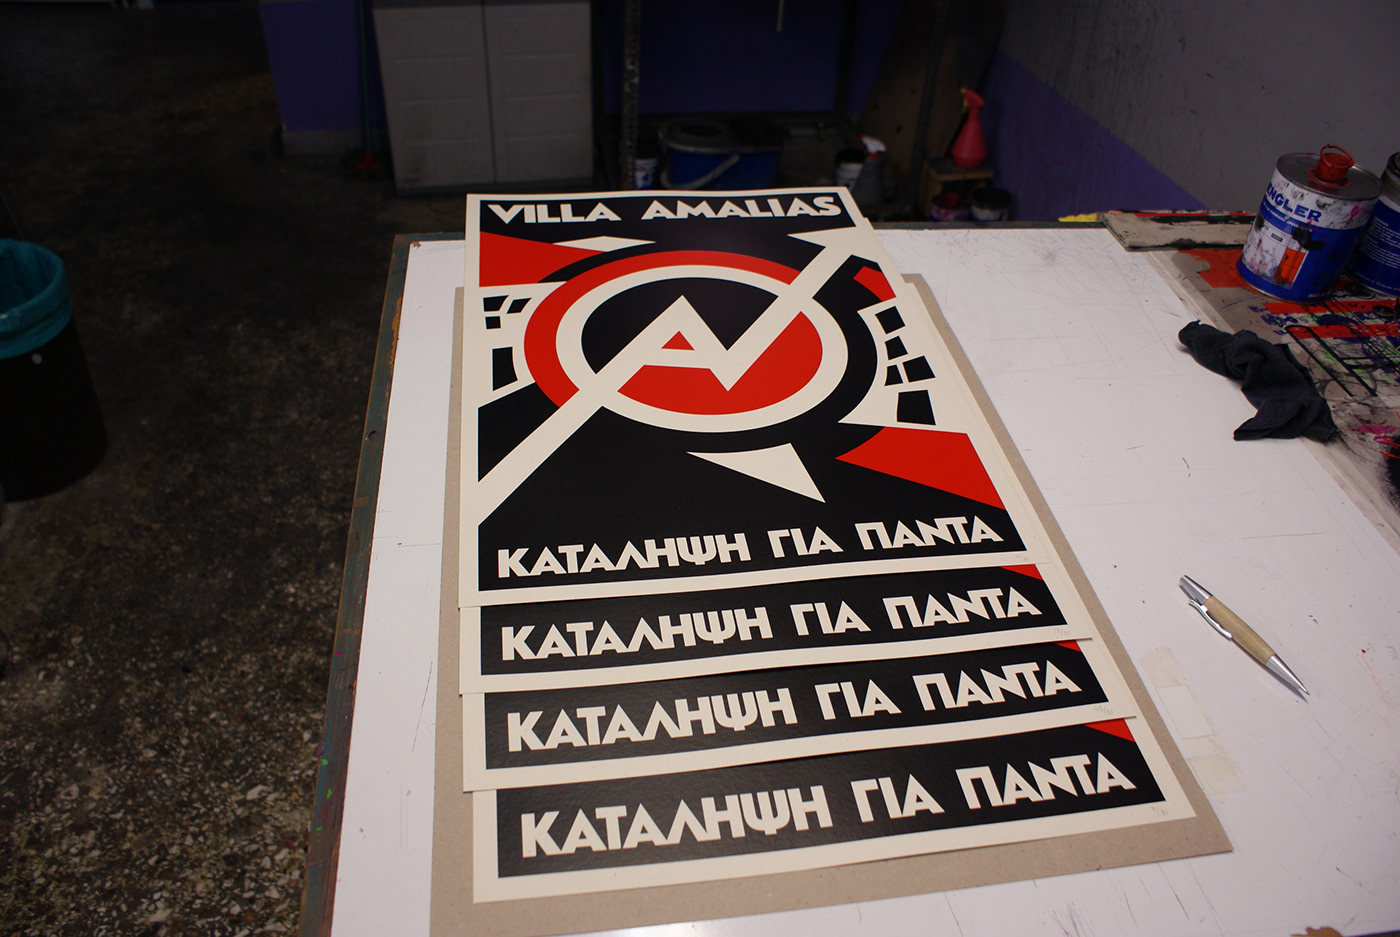 anarchy art designinsane petros voulgaris political poster Printing silkscreen squat villa amalias